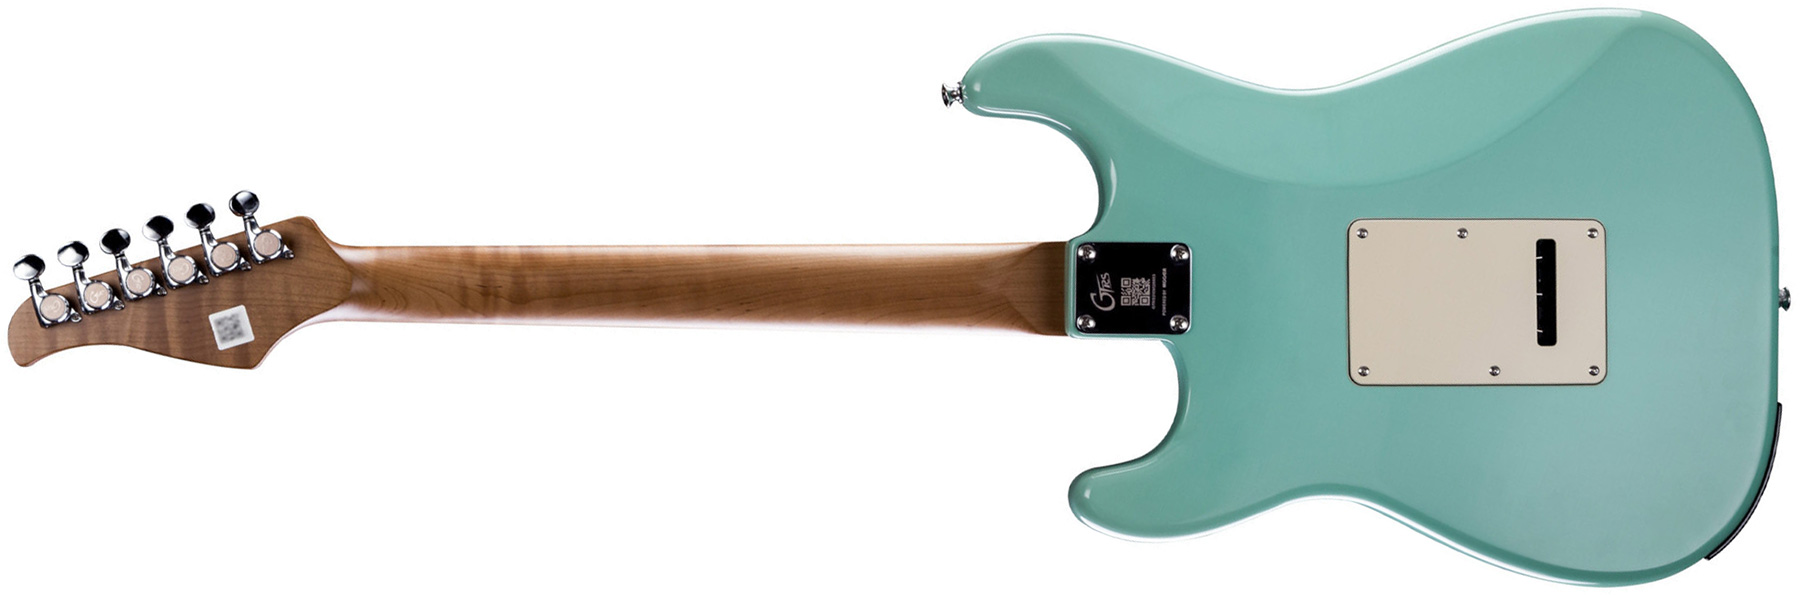 Mooer Gtrs P800 Pro Intelligent Guitar Hss Trem Rw - Mint Green - Modeling guitar - Variation 1